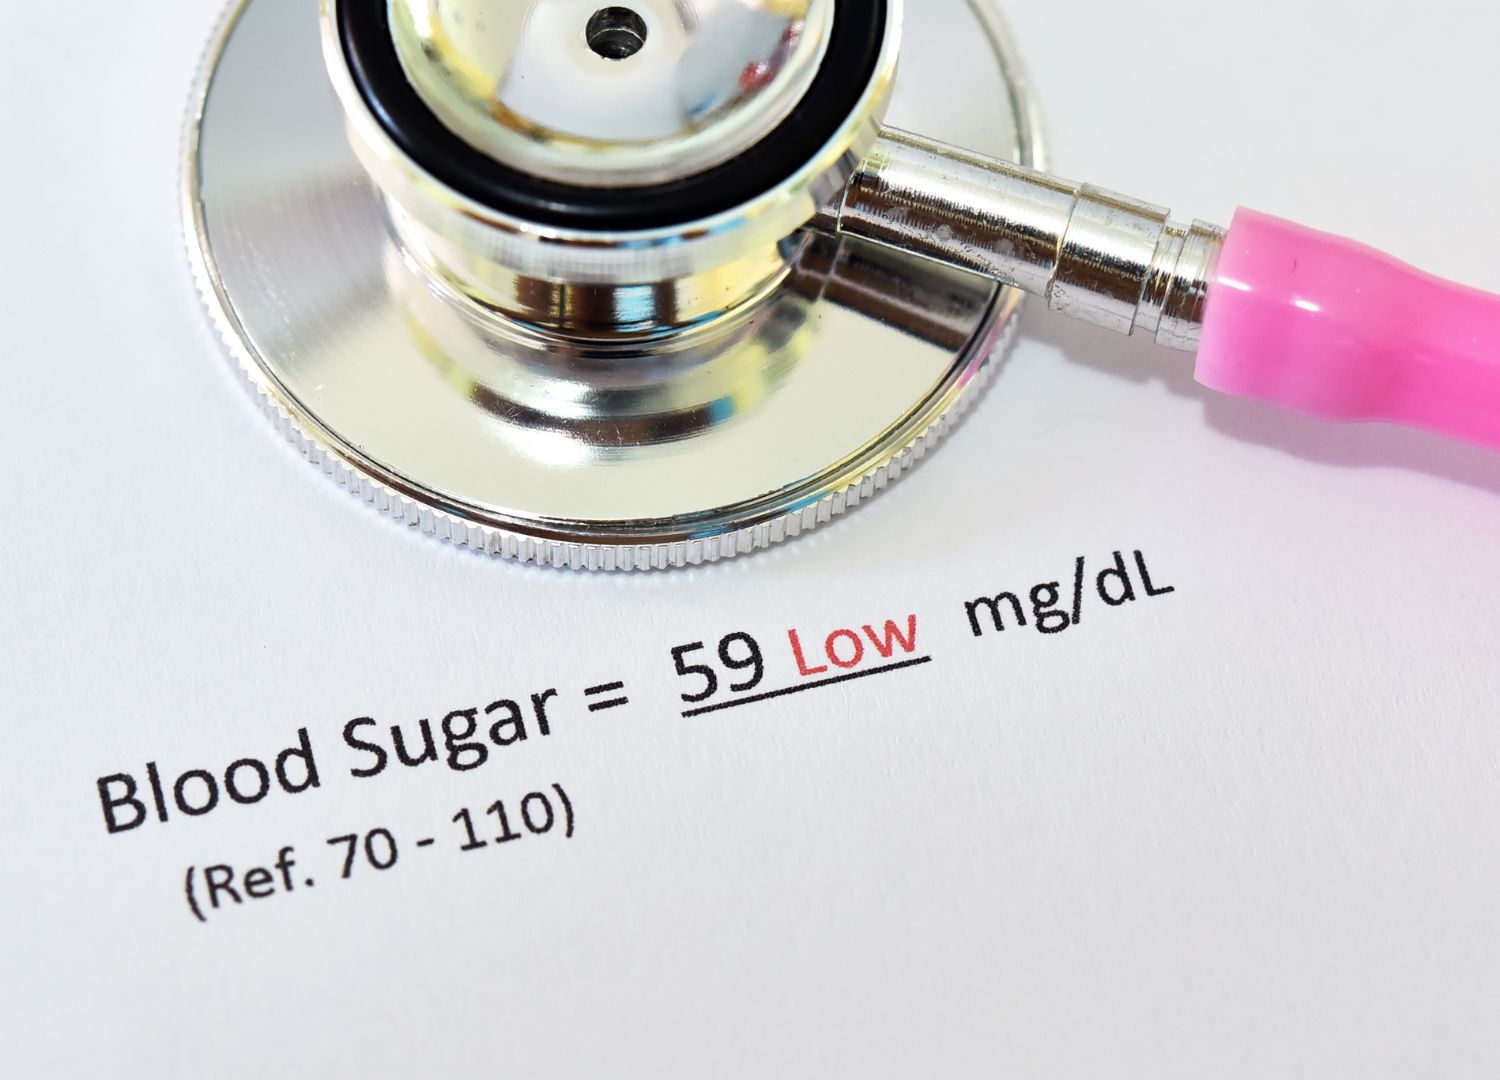 "Hypoglycemia - Low blood sugar  (Pidgin)"